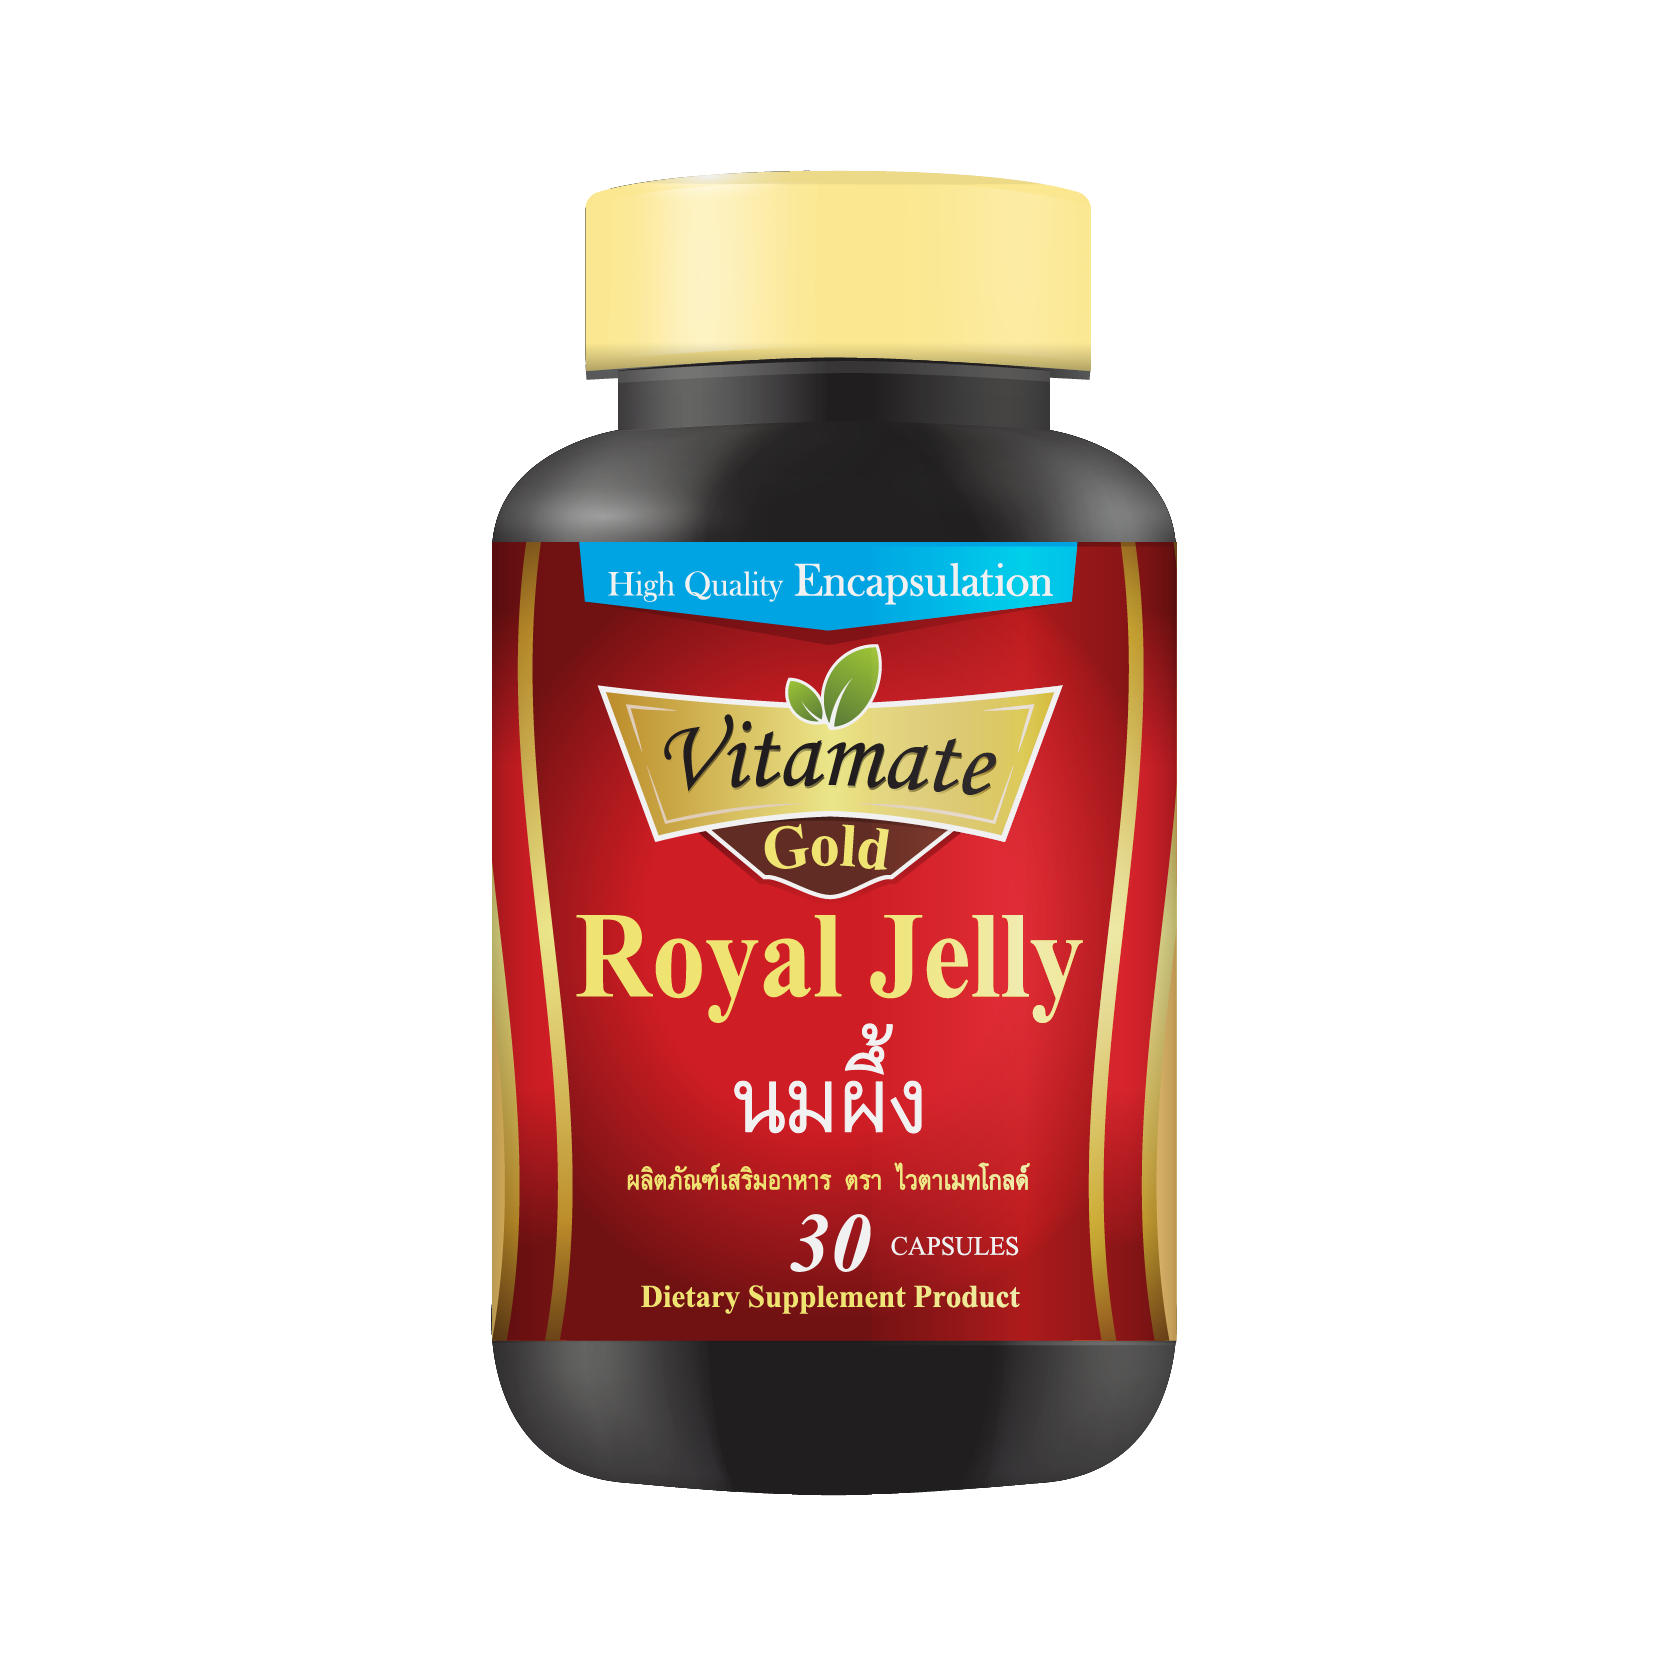 Vitamate Gold Royal Jelly